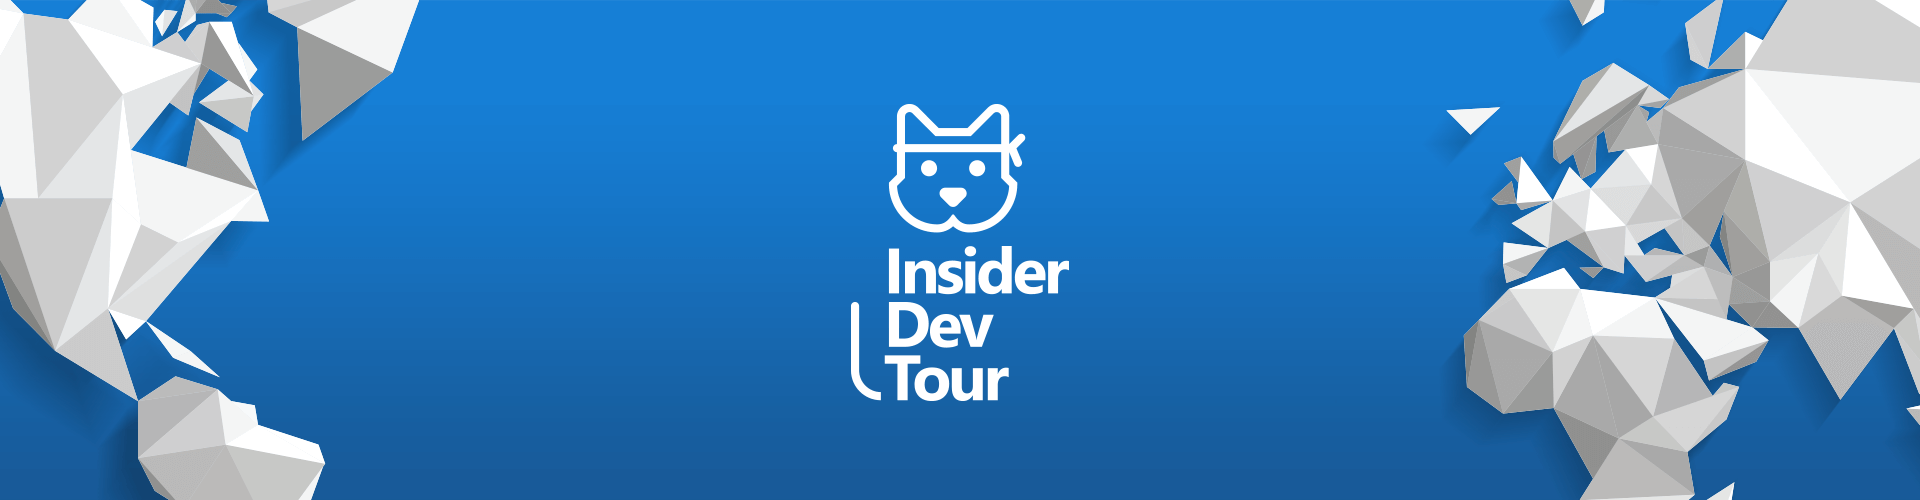 Microsoft Insider Dev Tour